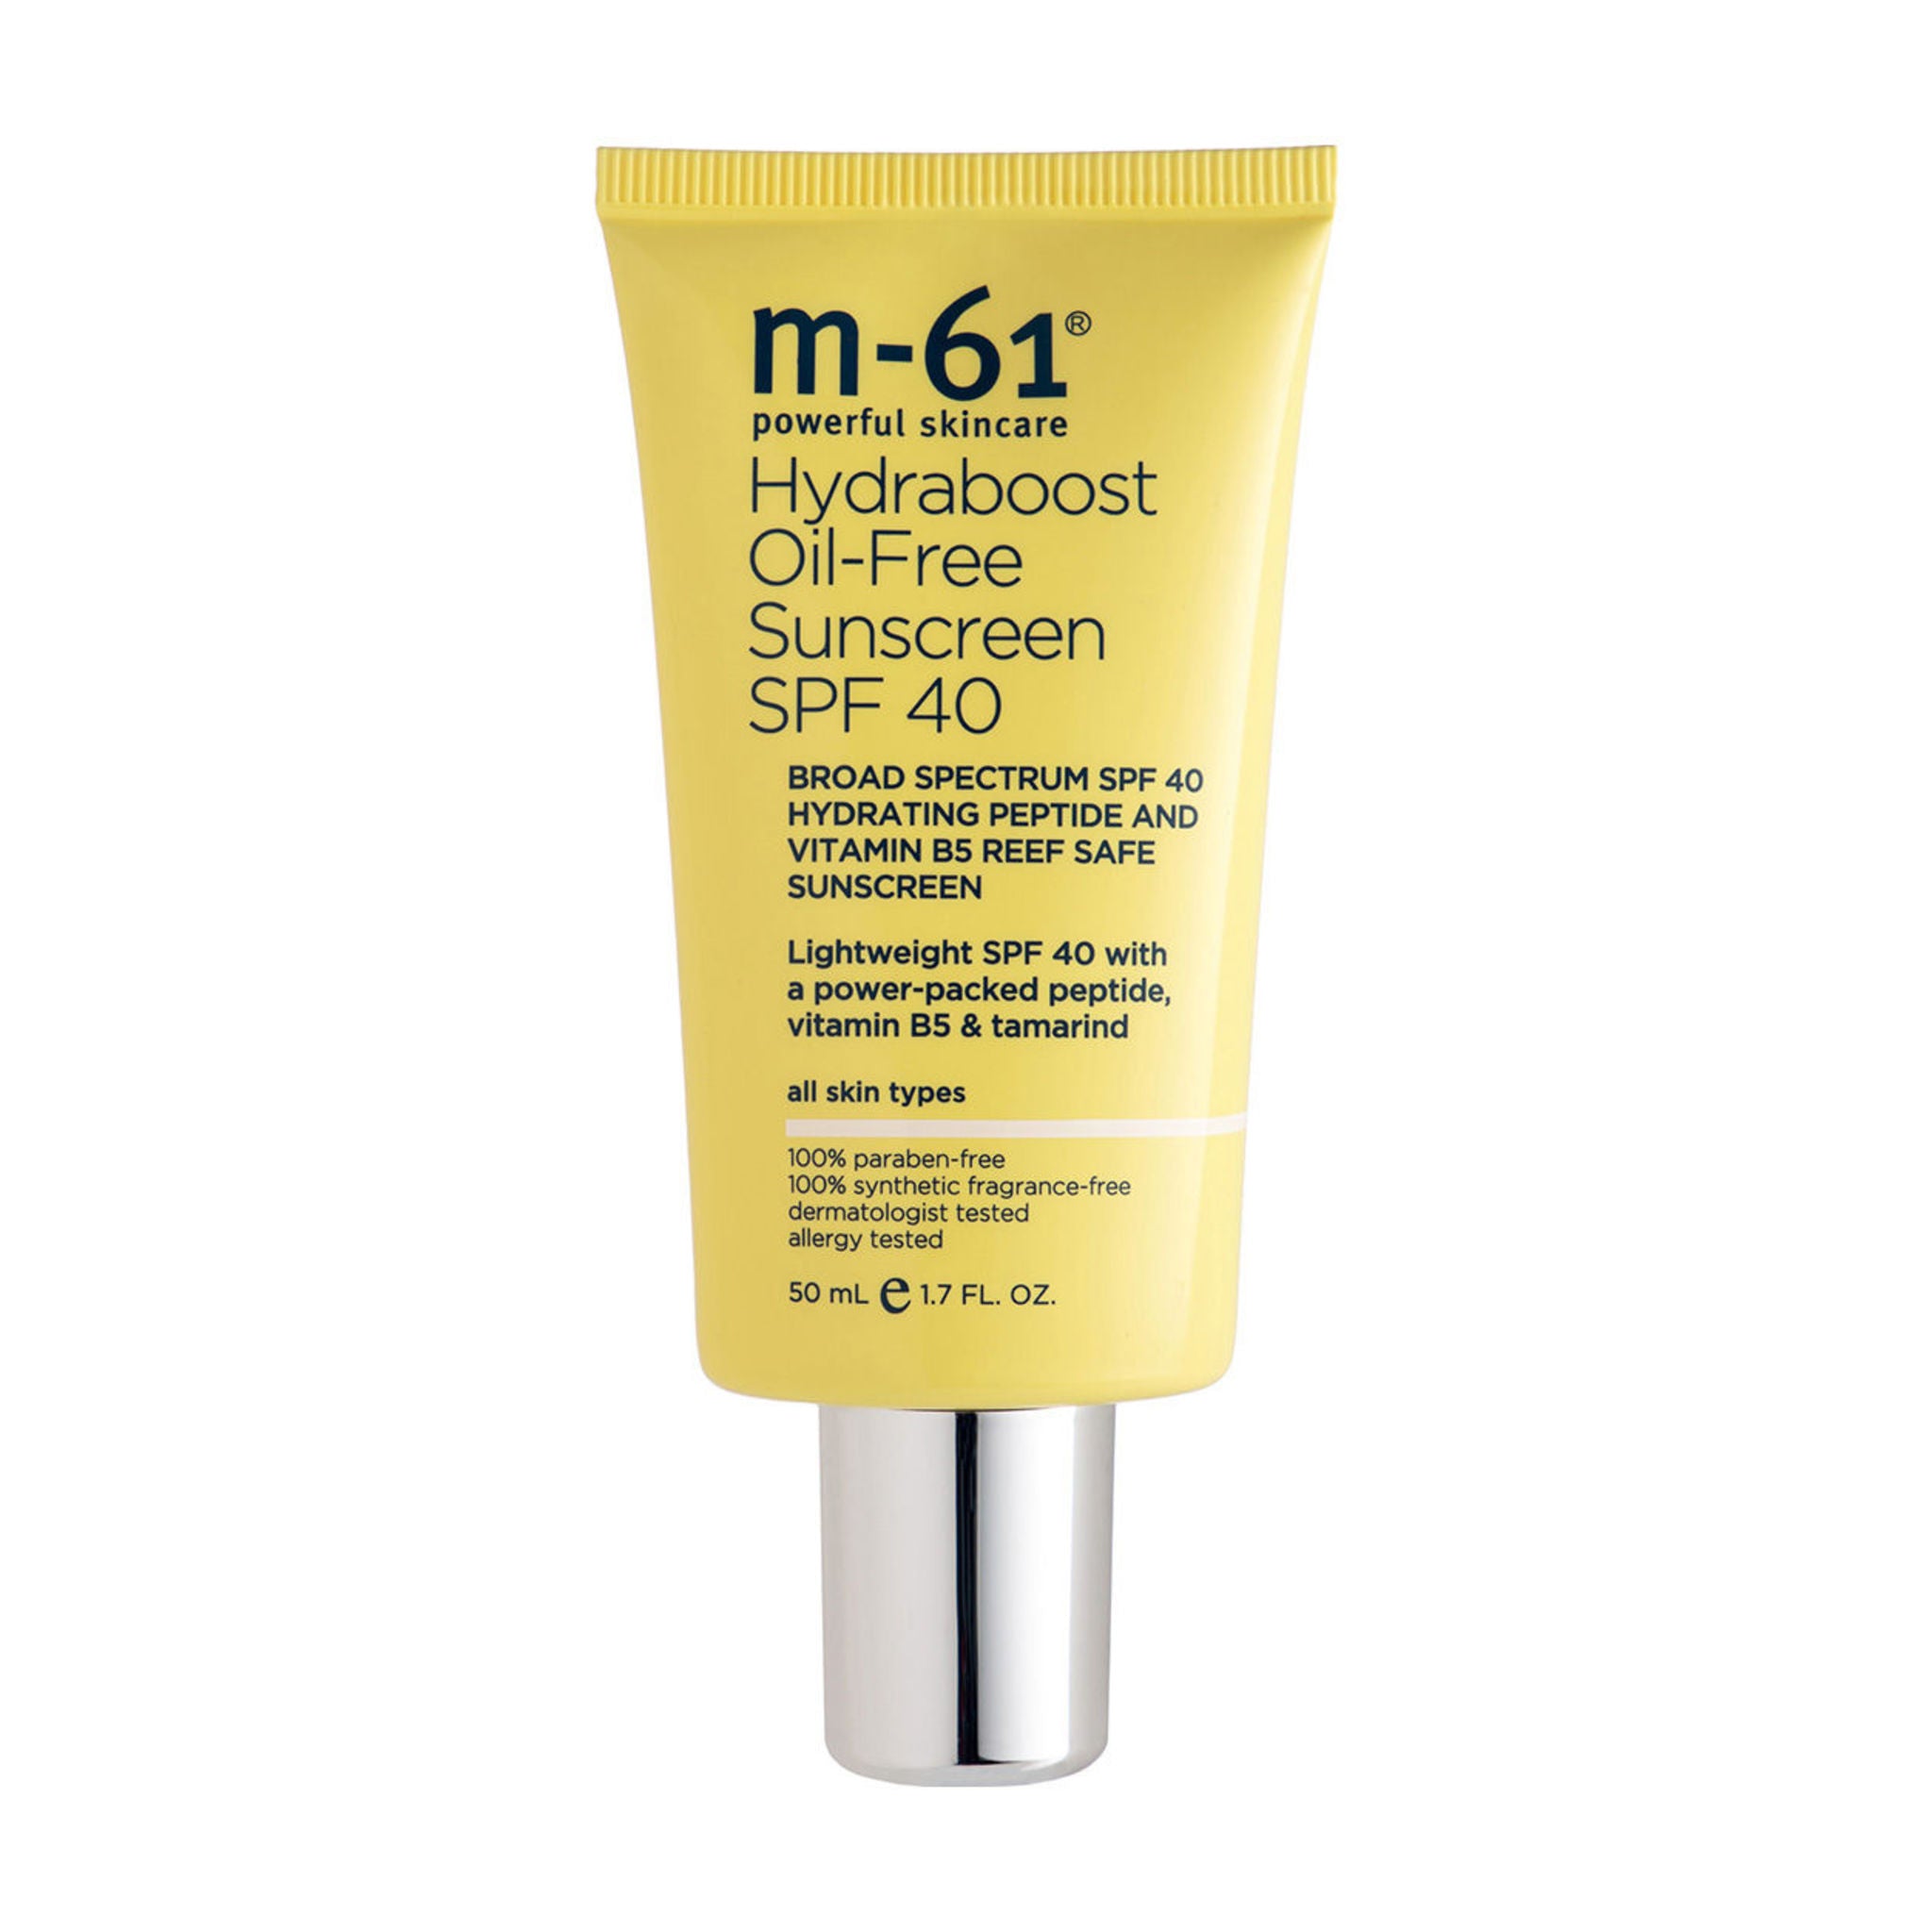 M-61 Hydraboost Oil-Free Sunscreen SPF 40 main image.